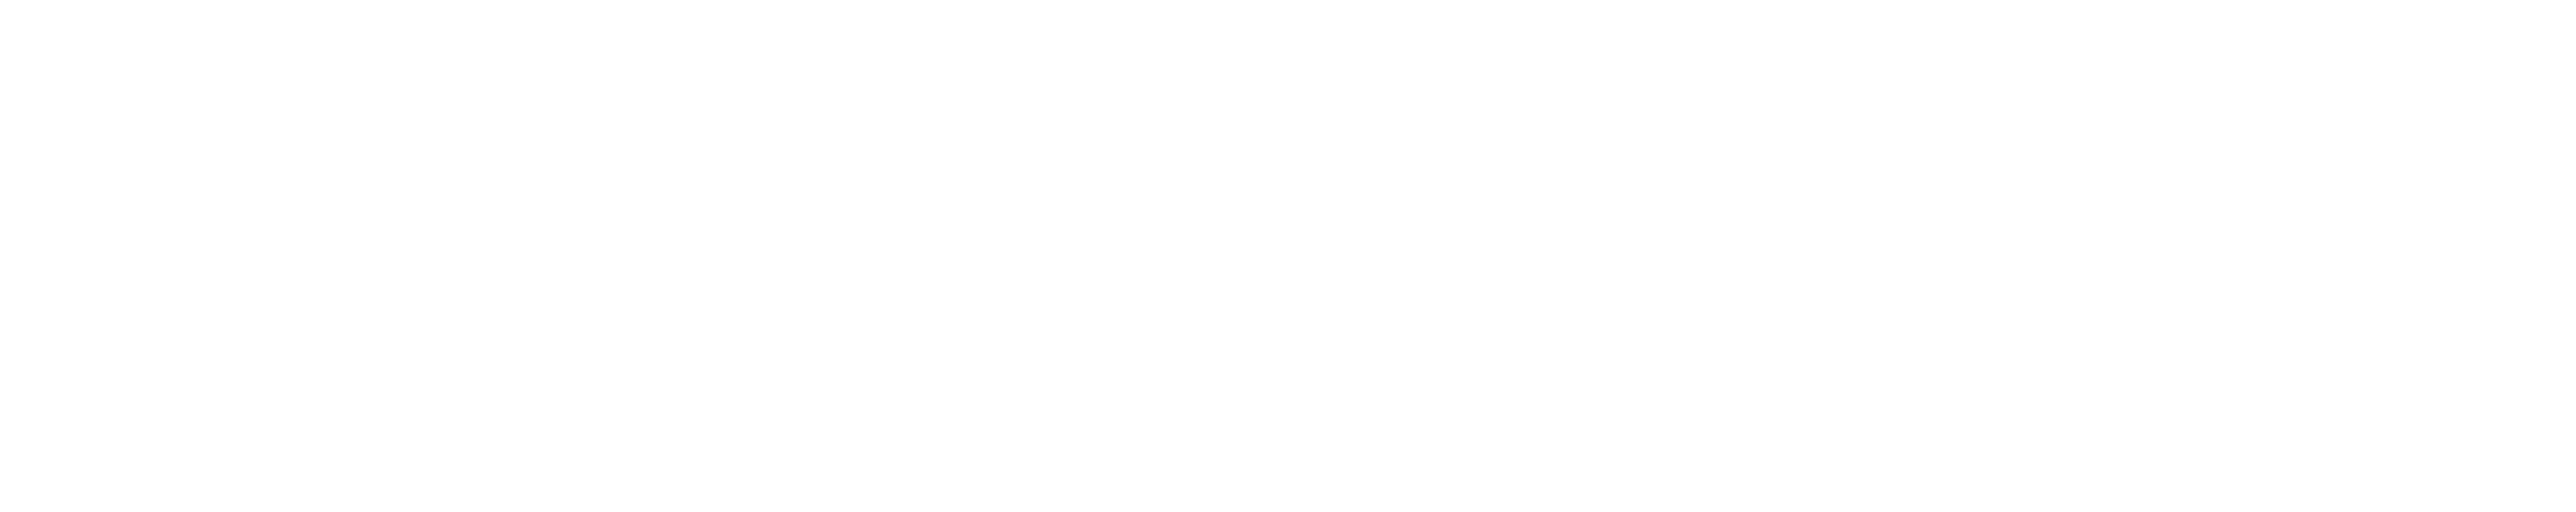 Revision History Header Logo